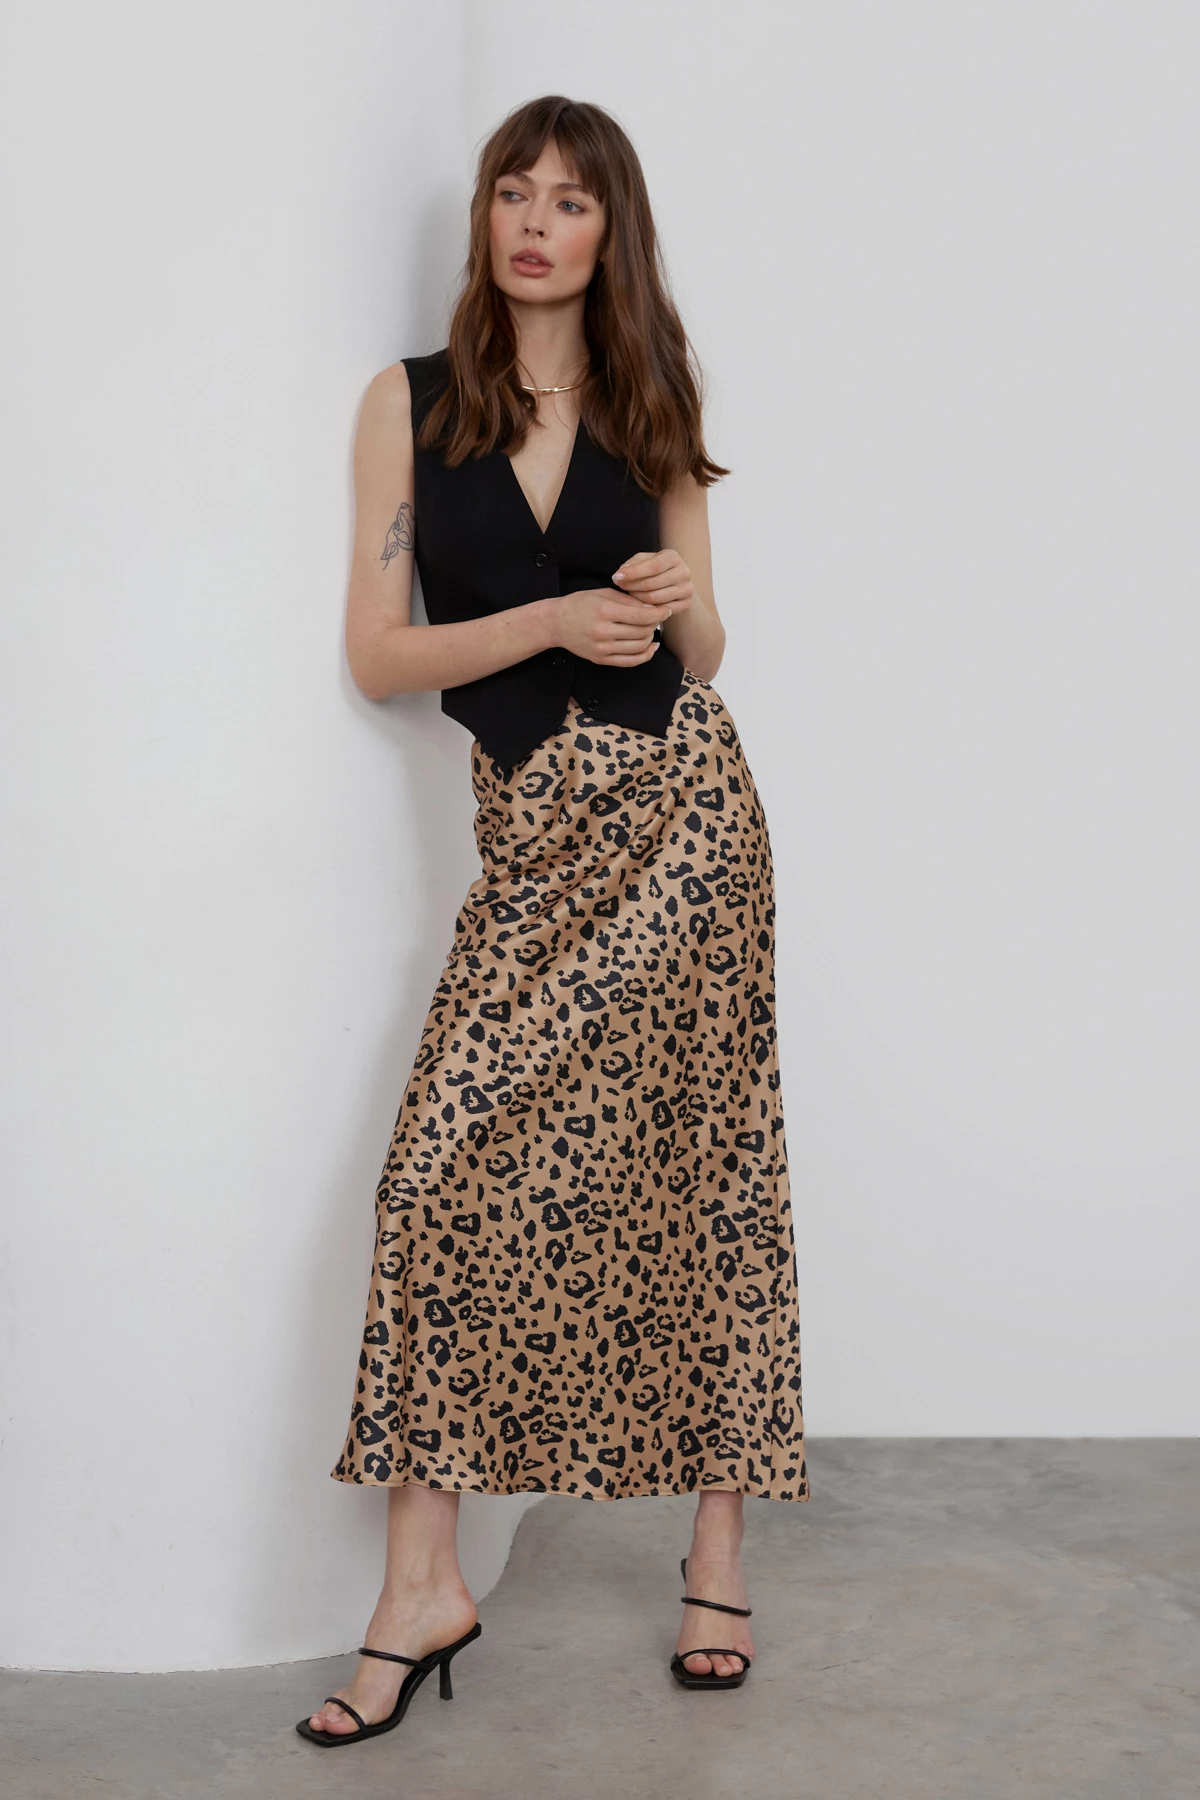 Mid-length satin skirt in leopard print, photo 1